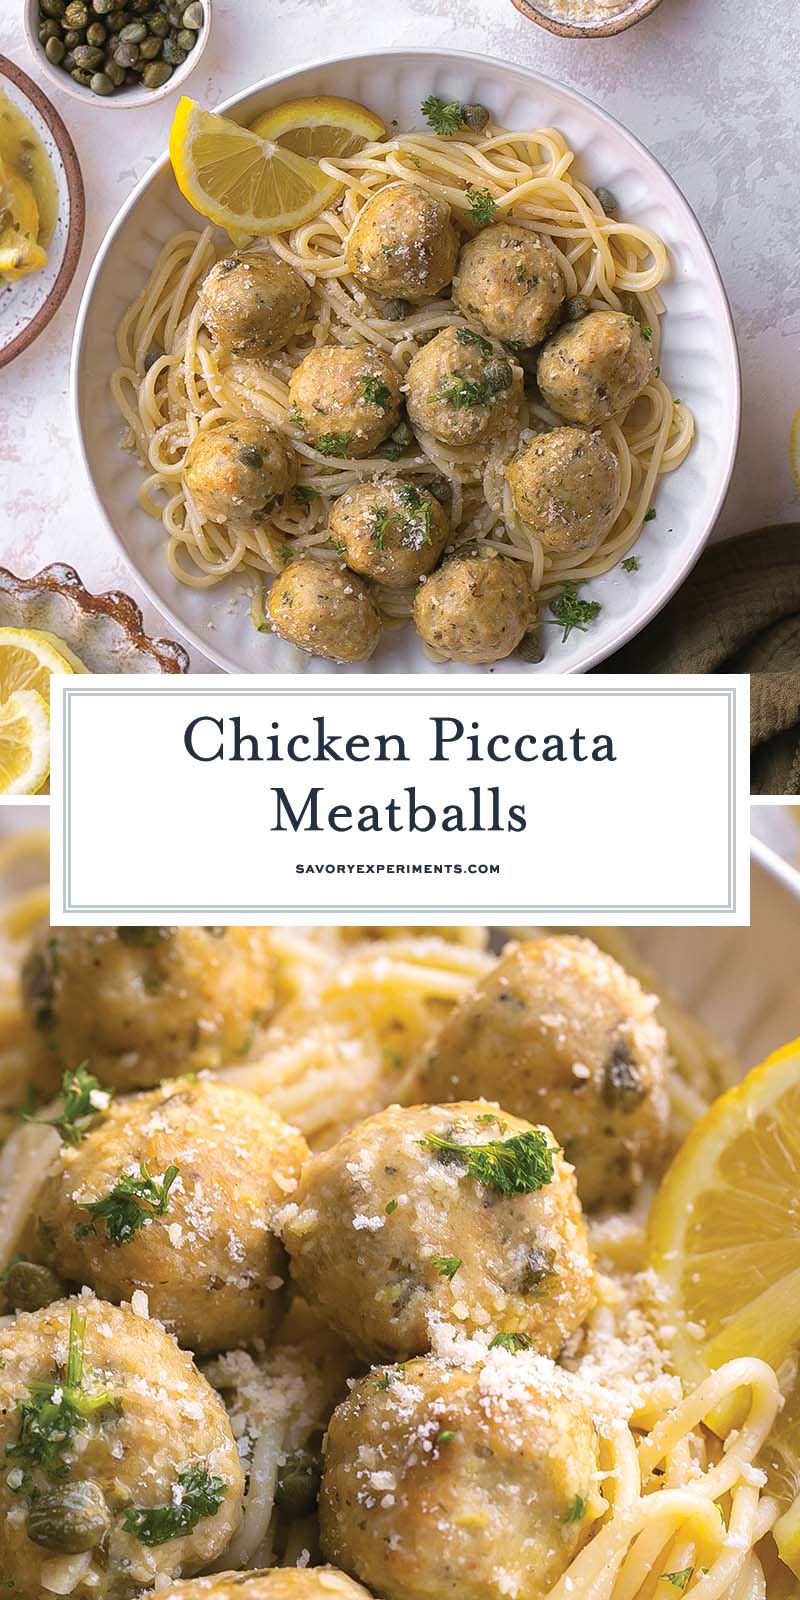 Juicy Chicken Piccata Meatballs Recipe (Just Like the Classic Dish)